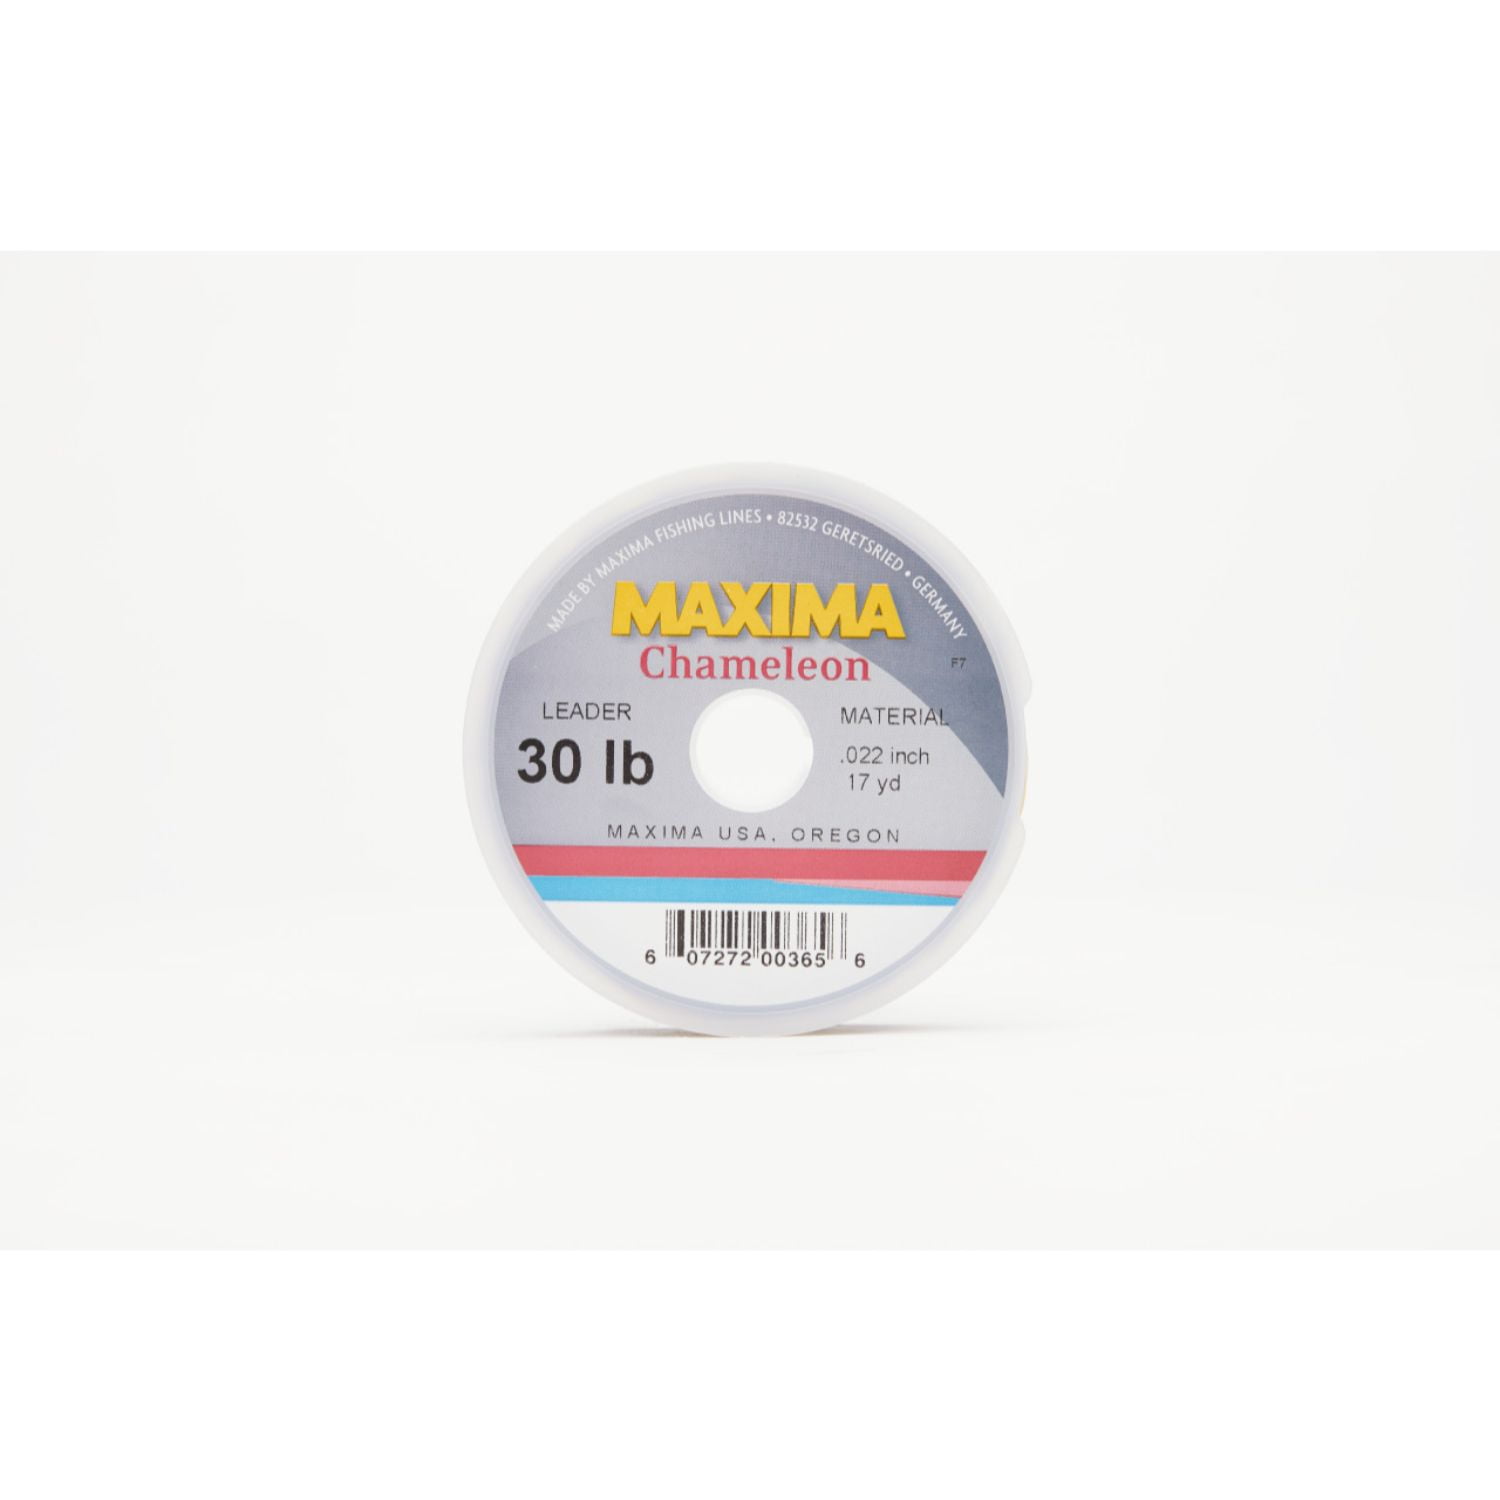 Maxima Chameleon Fly Fishing Leader/Tippet Material - 30lb 